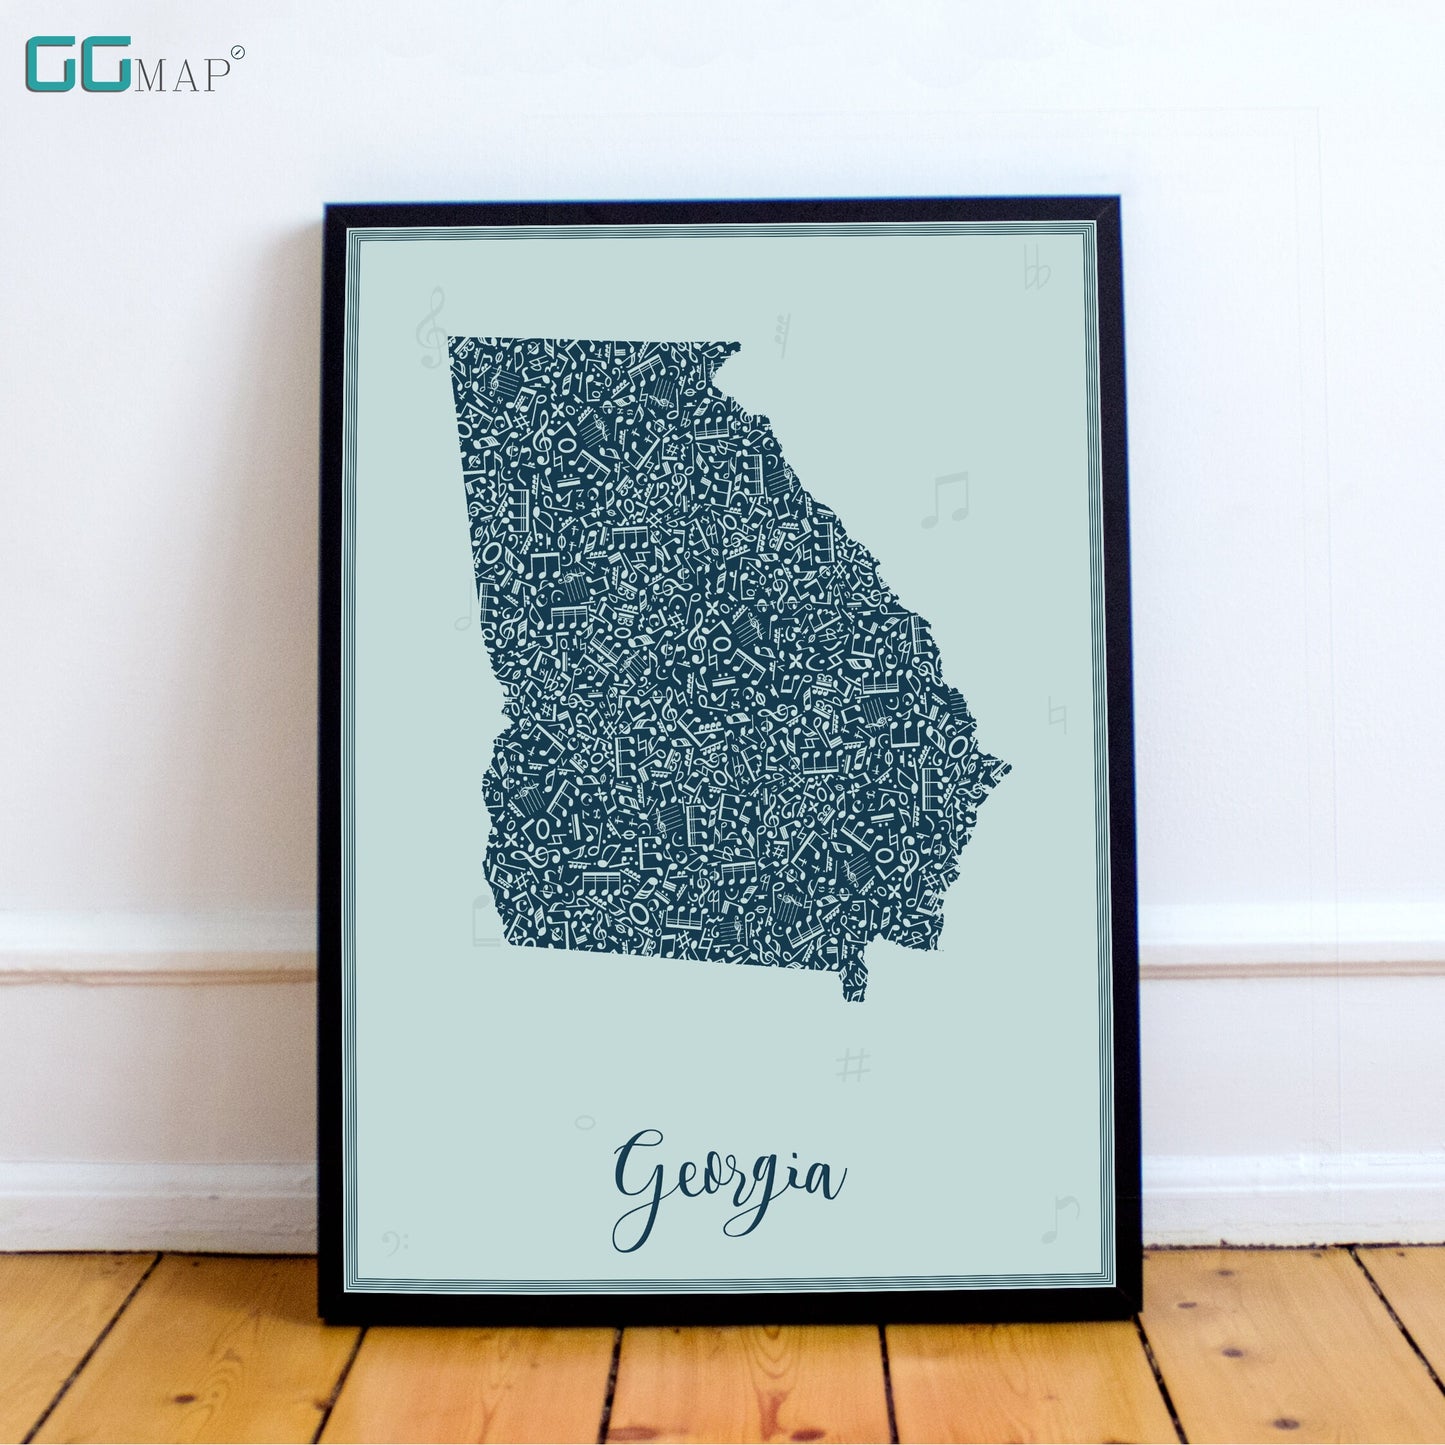 GEORGIA map - Georgia Music Blue map - Travel poster - Home Decor - Wall decor - Office map - Georgia gift - GGmap - Georgia poster